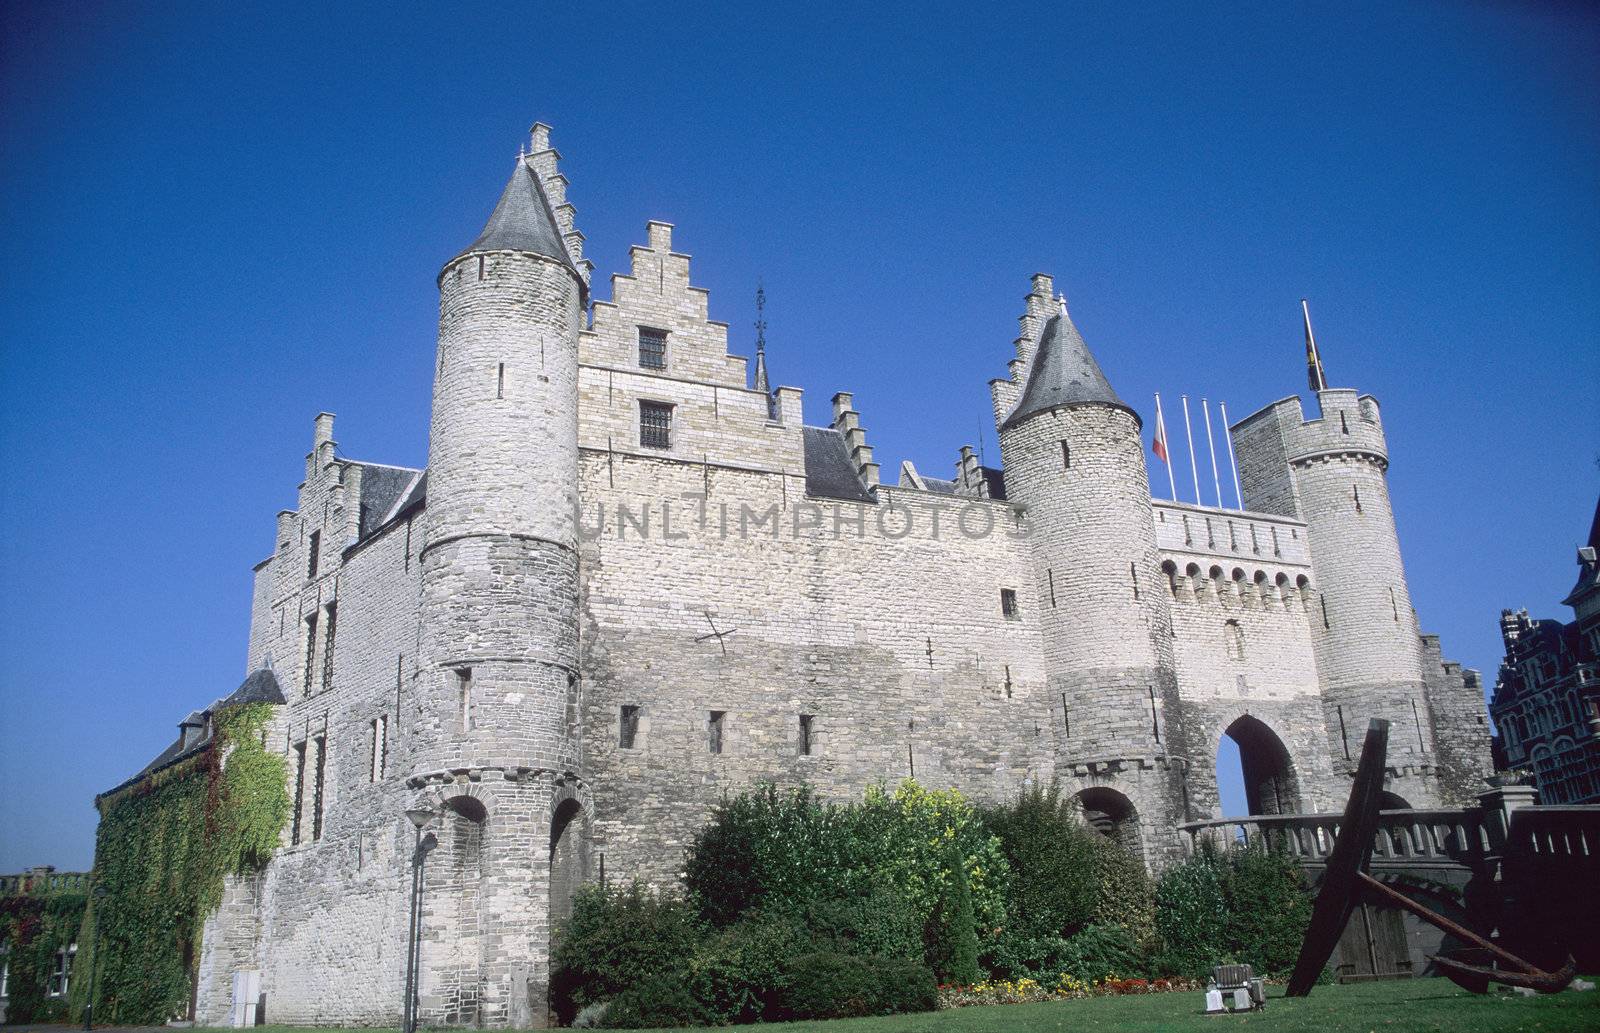 The ancient stone castle of Antwerp, Belgium